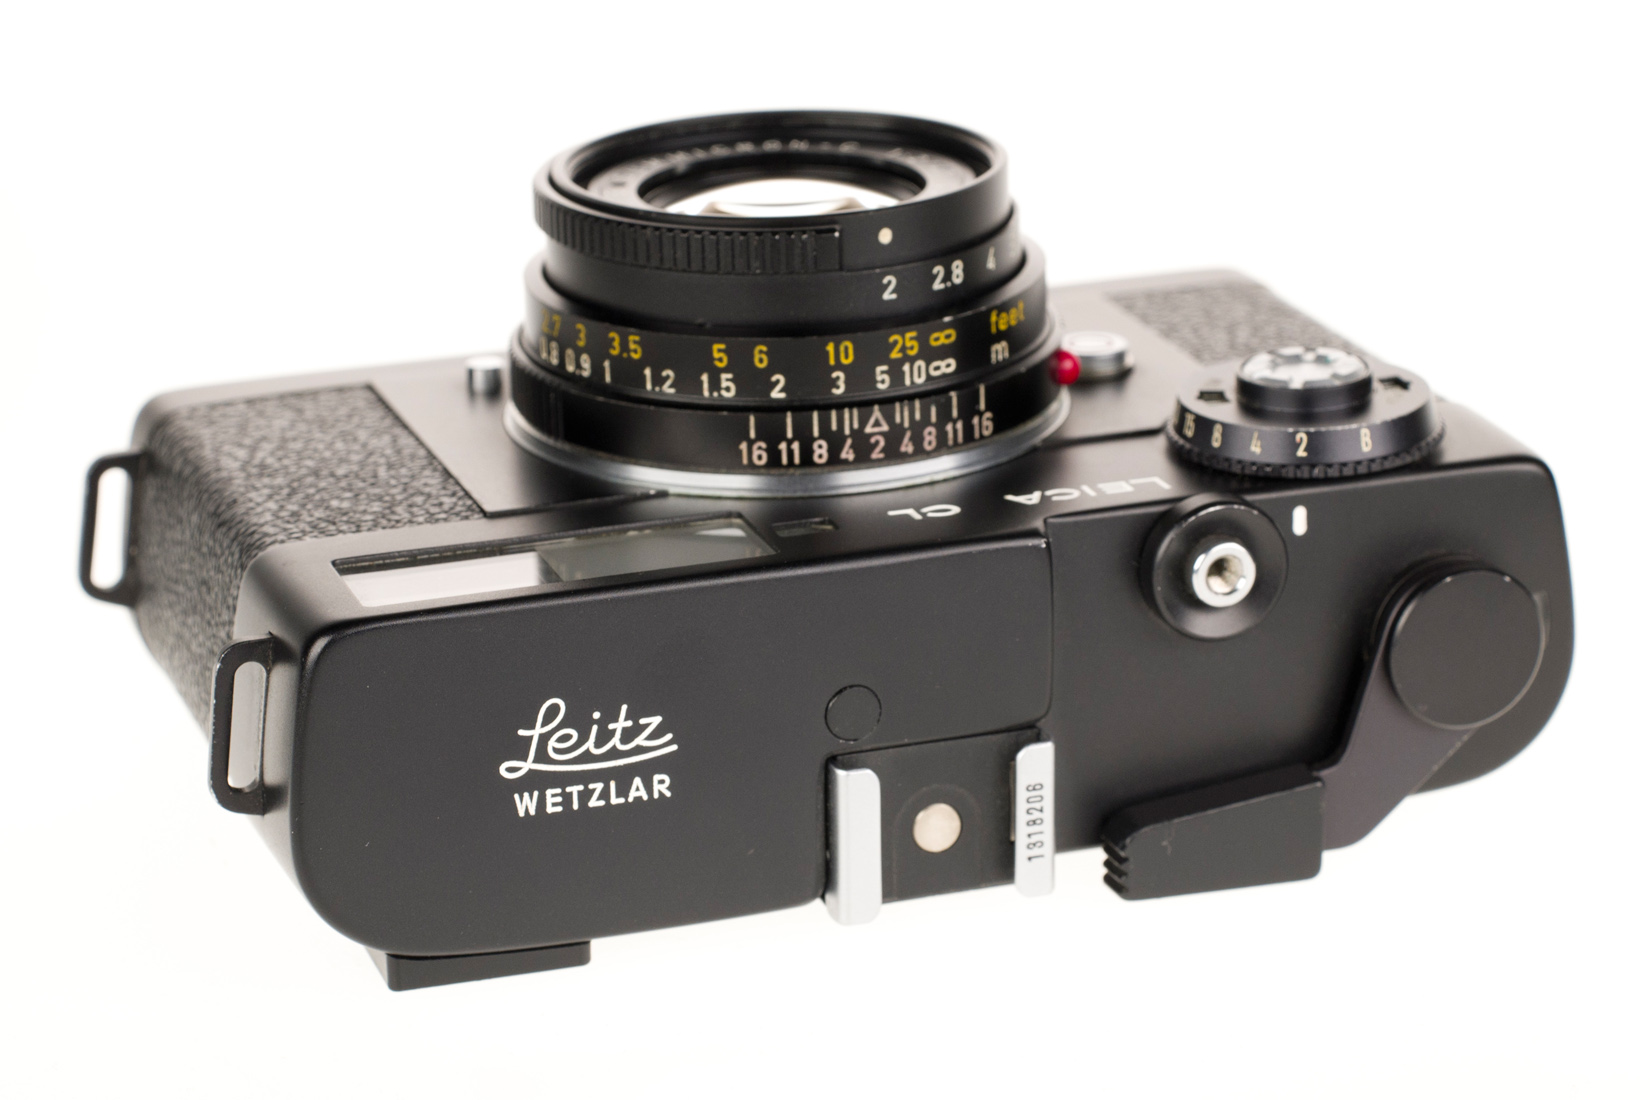 Leica CL + Summicron-C 1:2/40mm